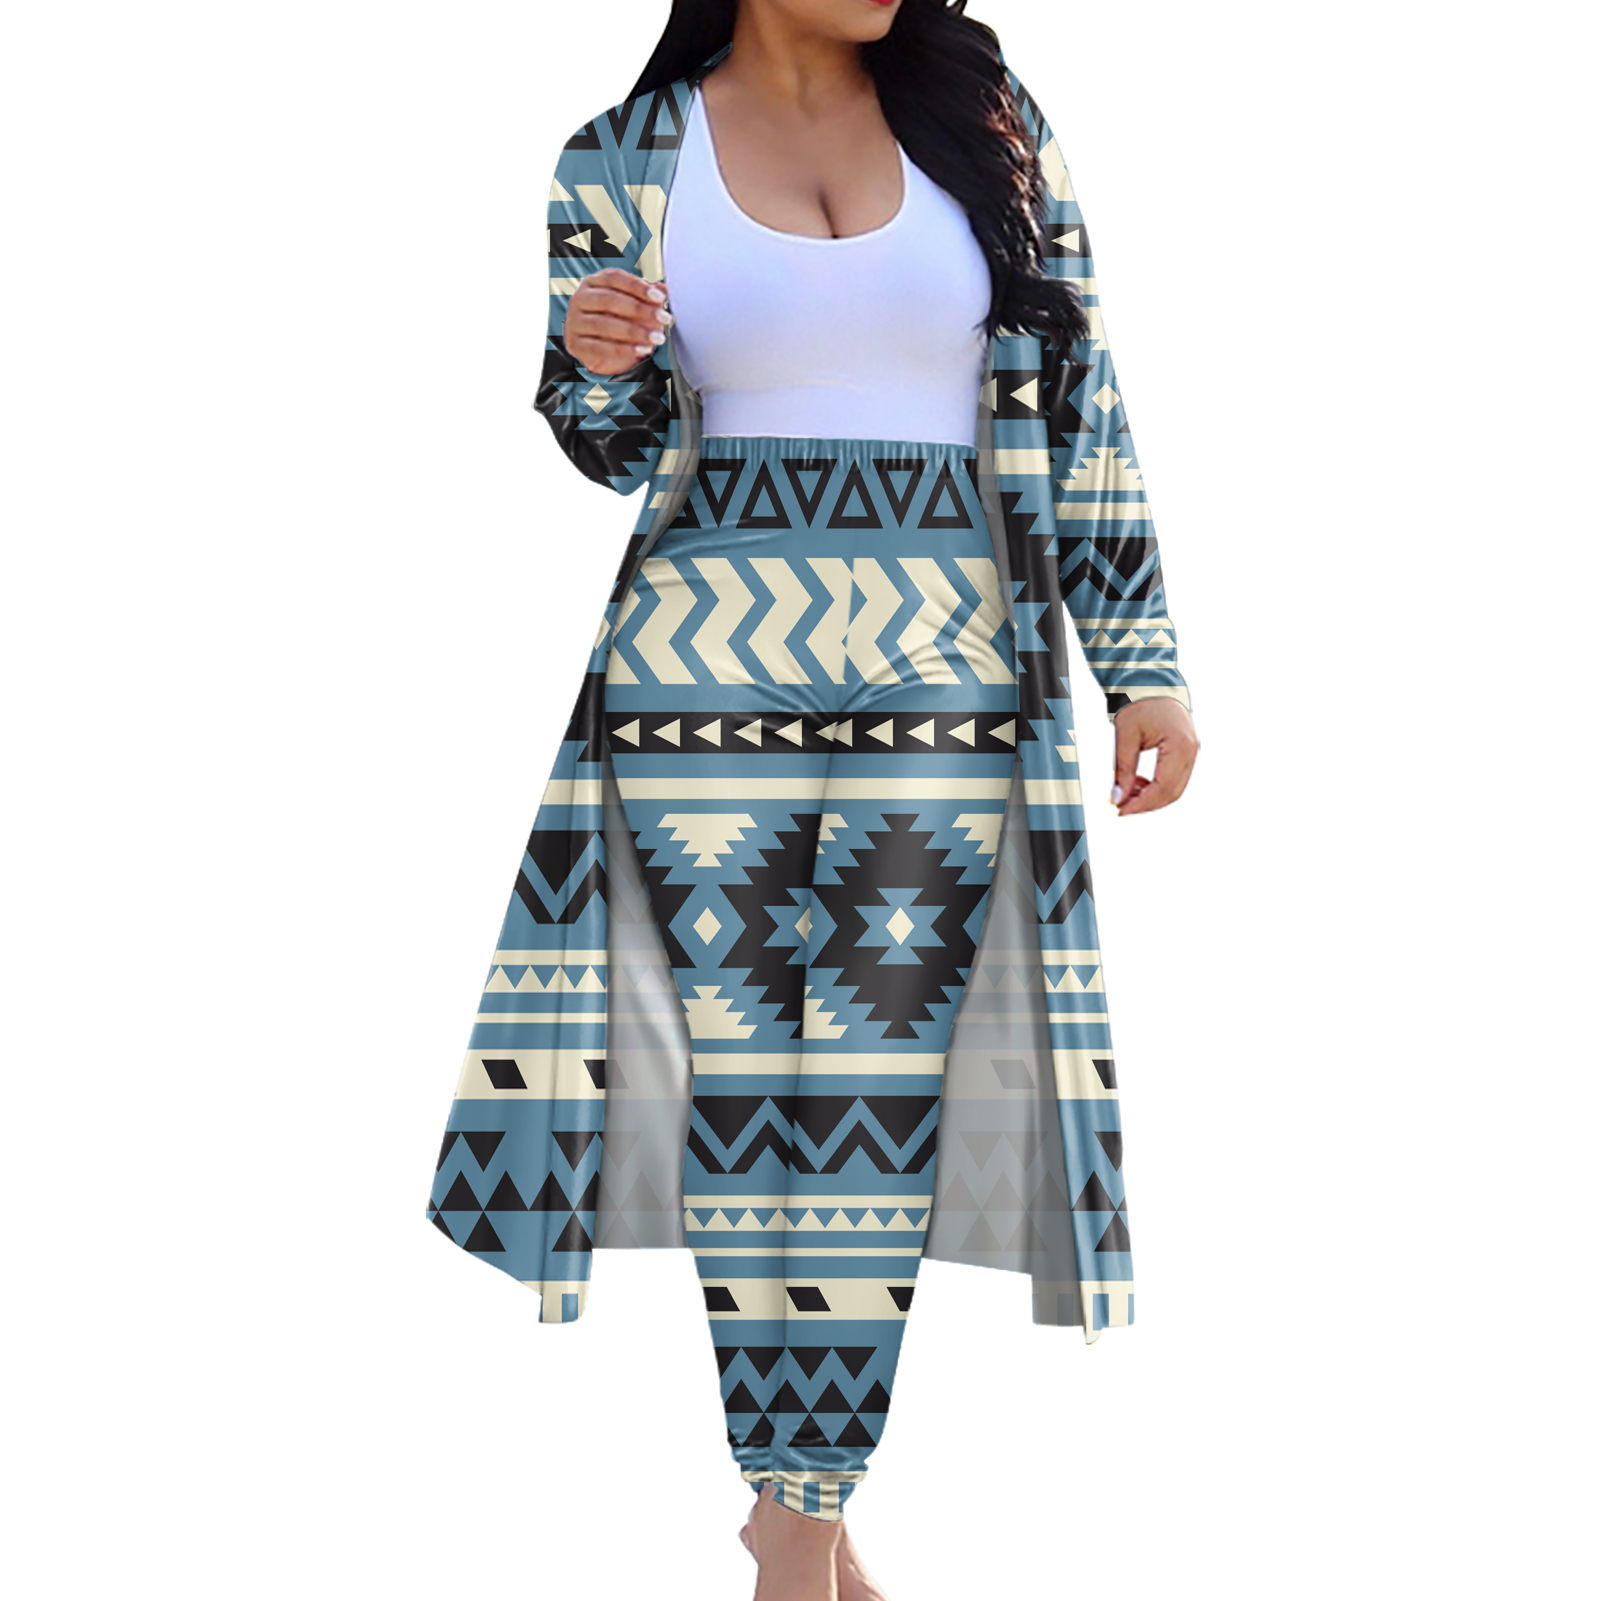 Powwow StoreCLP00017 Tribe Design Native American Cardigan Coat Long Pant Set